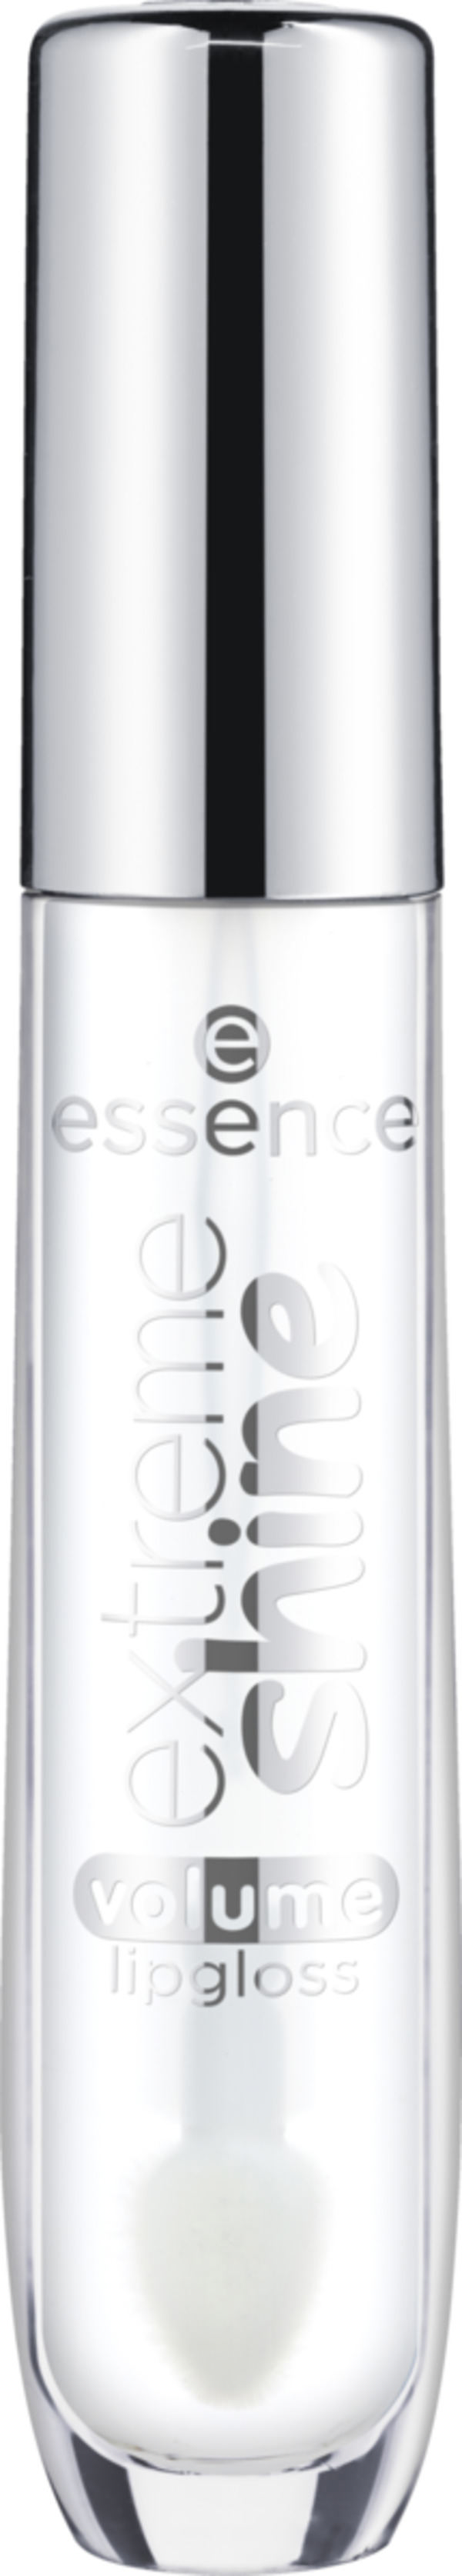 Bild 1 von essence extreme shine volume lipgloss 01 Crystal Clear